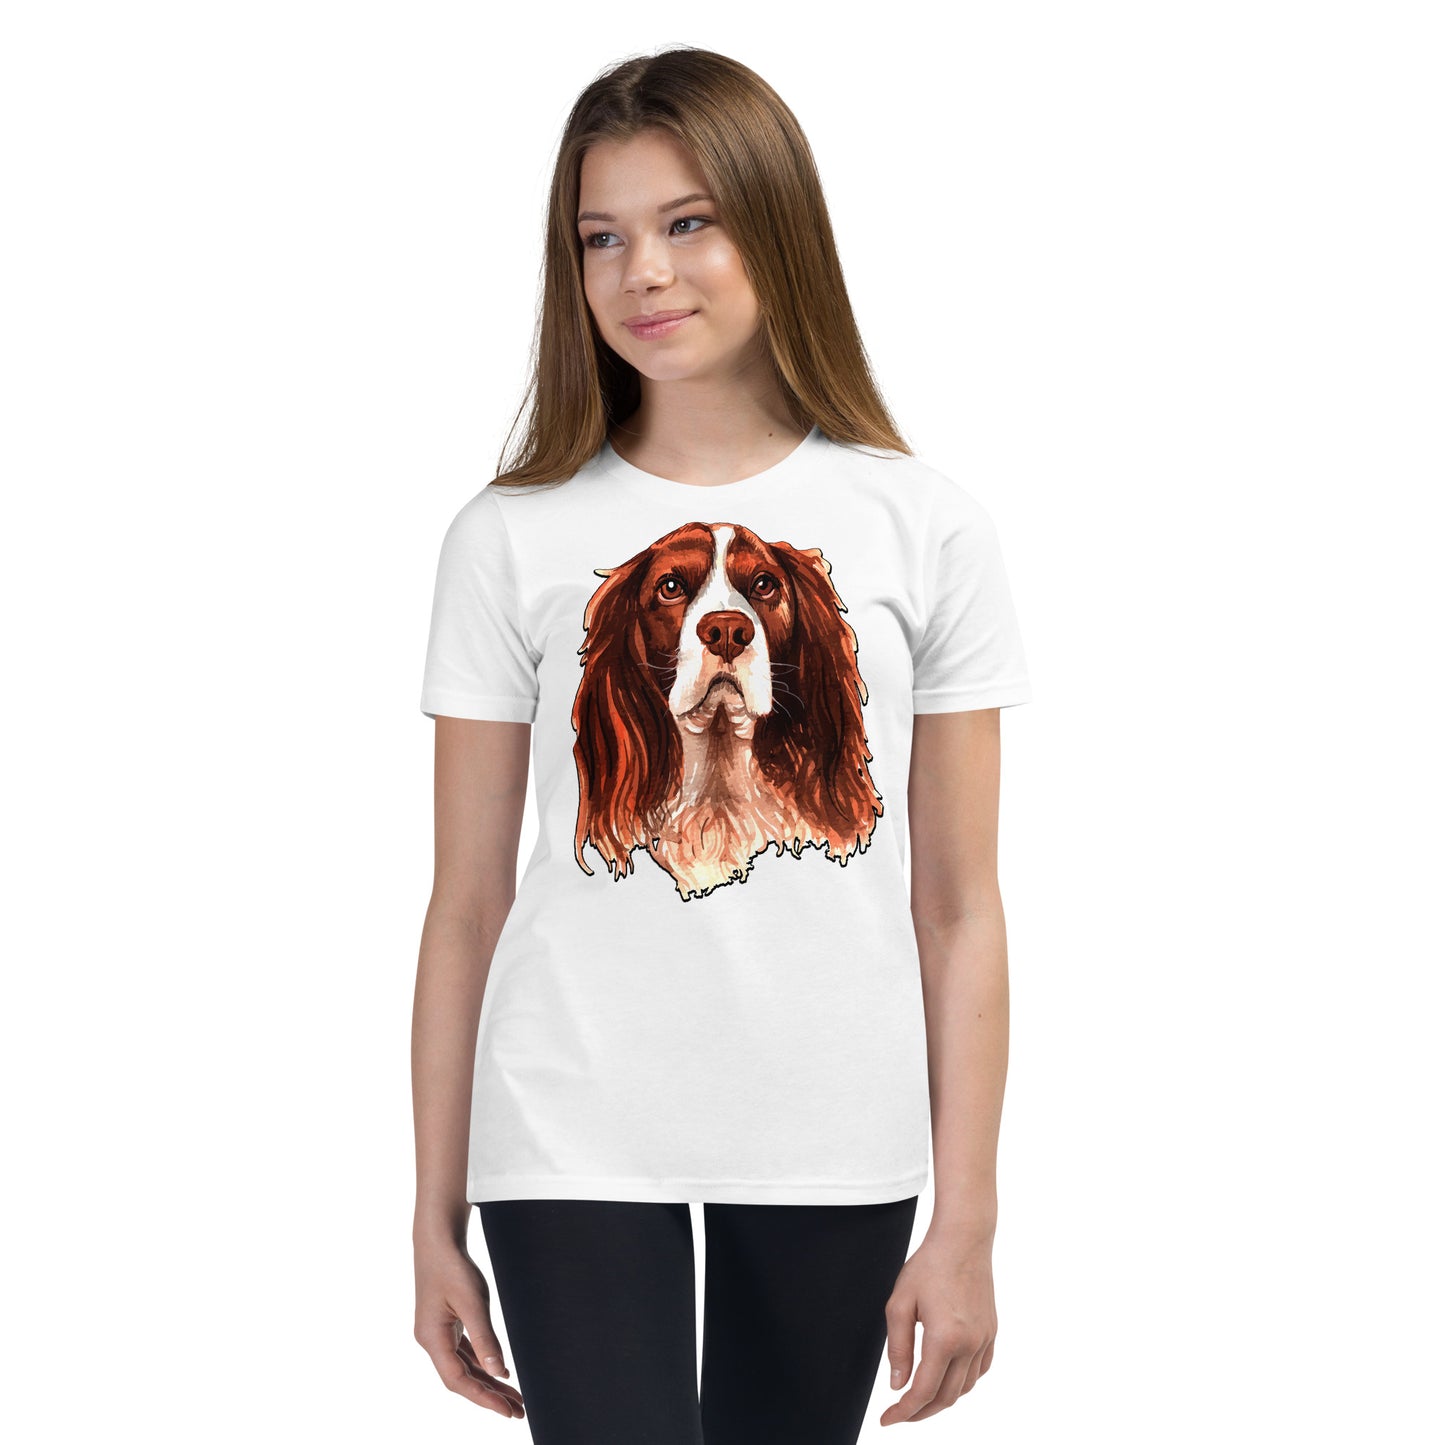 Cute Dog Illustration T-shirt, No. 0191